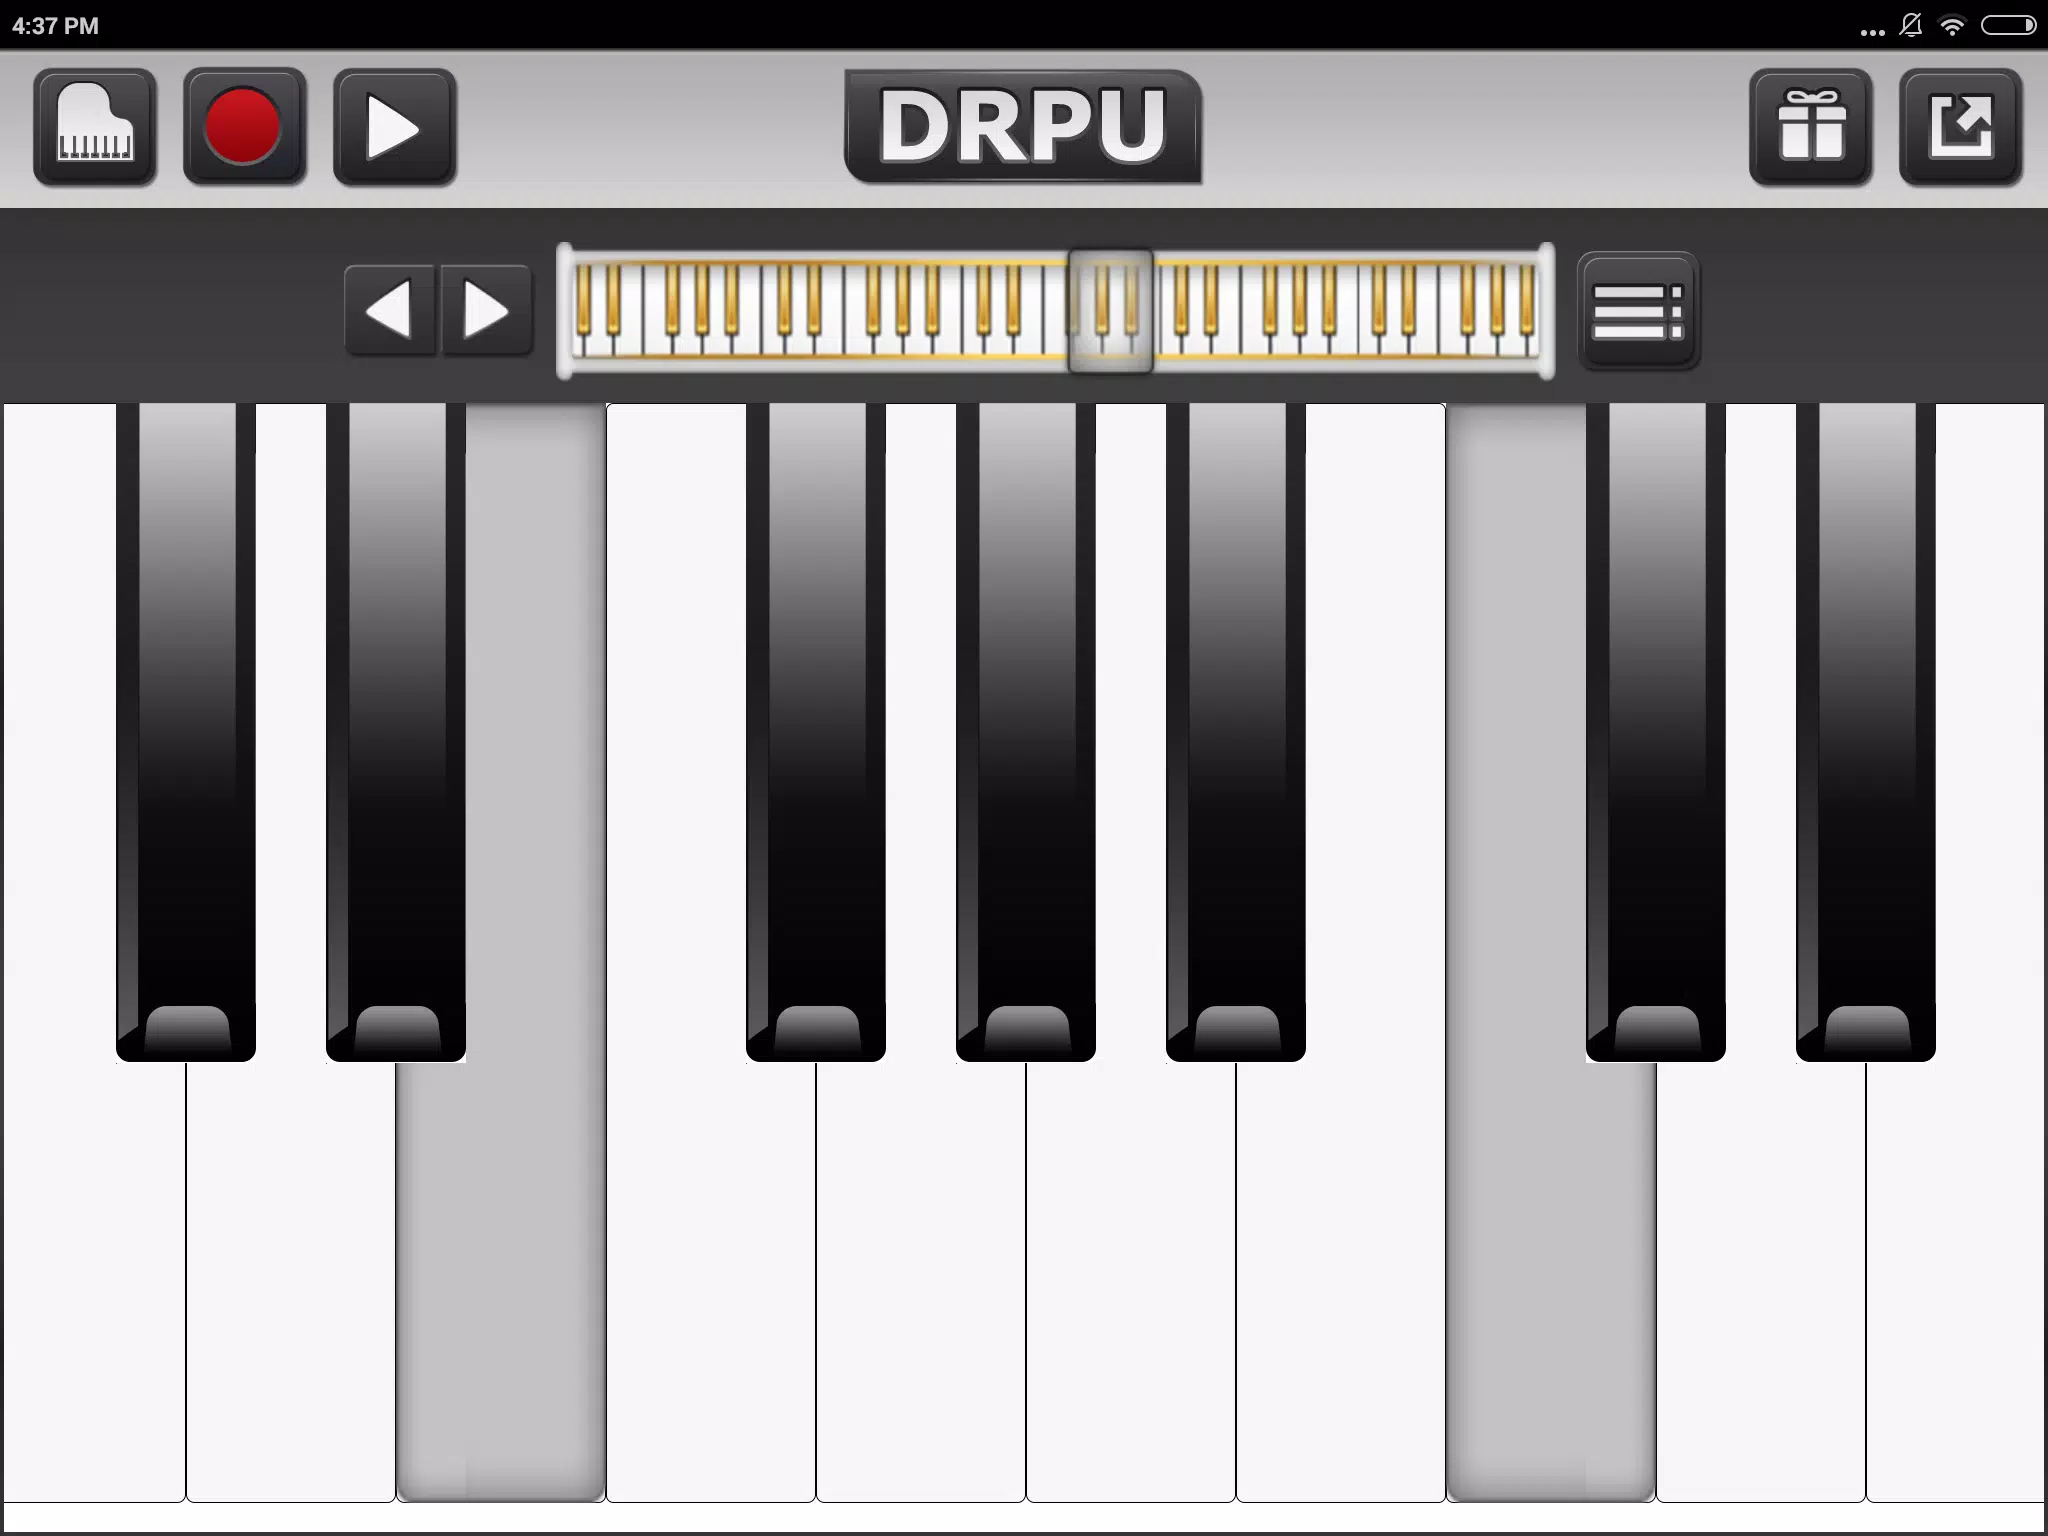 Electric Piano Digital Music APK v3.9 Free Download - APK4Fun